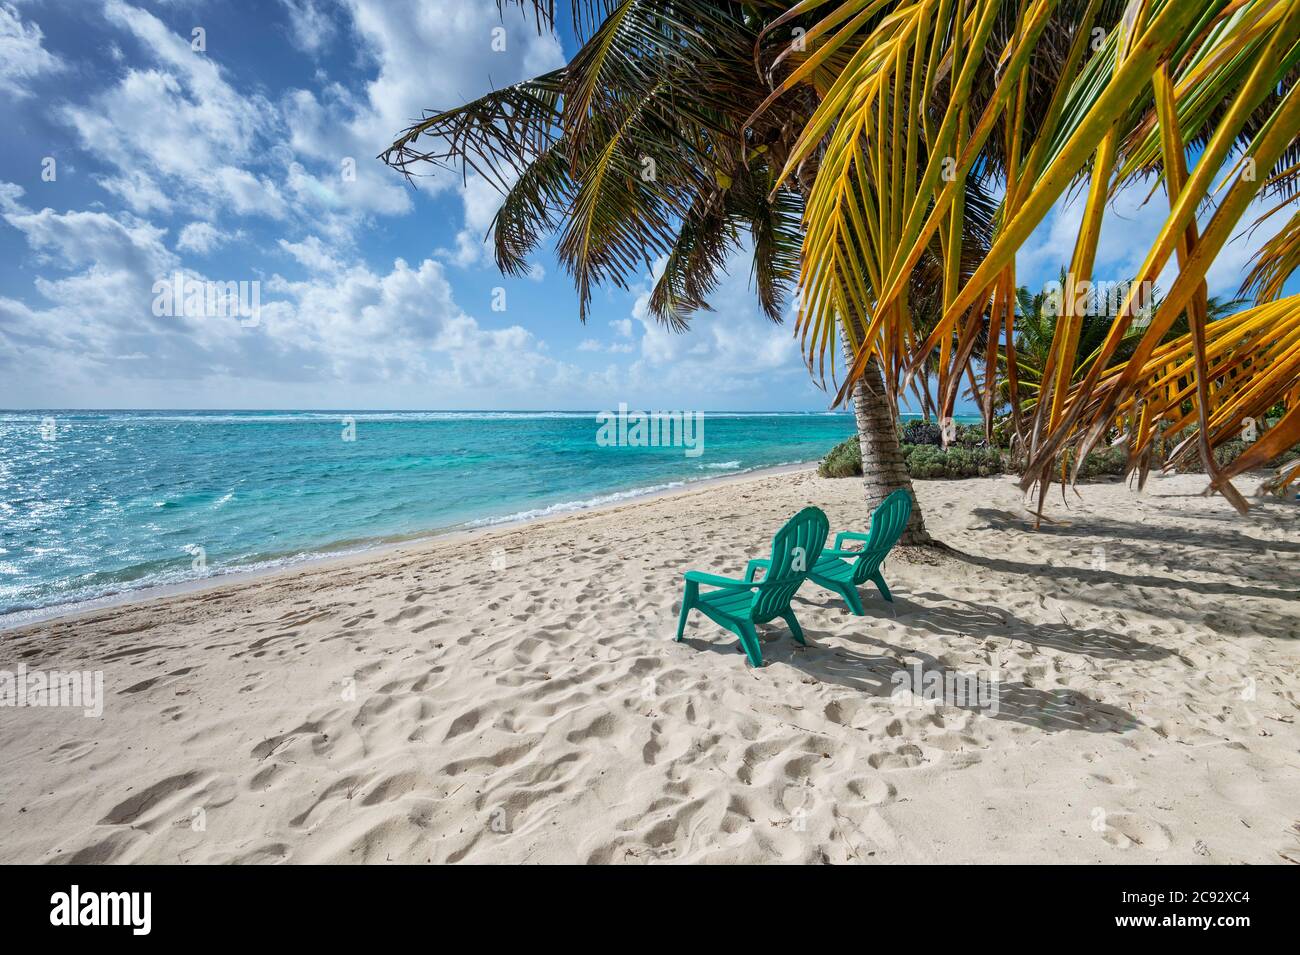 Beach Chairs and palm trees, Grand Cayman Island Stock Photo